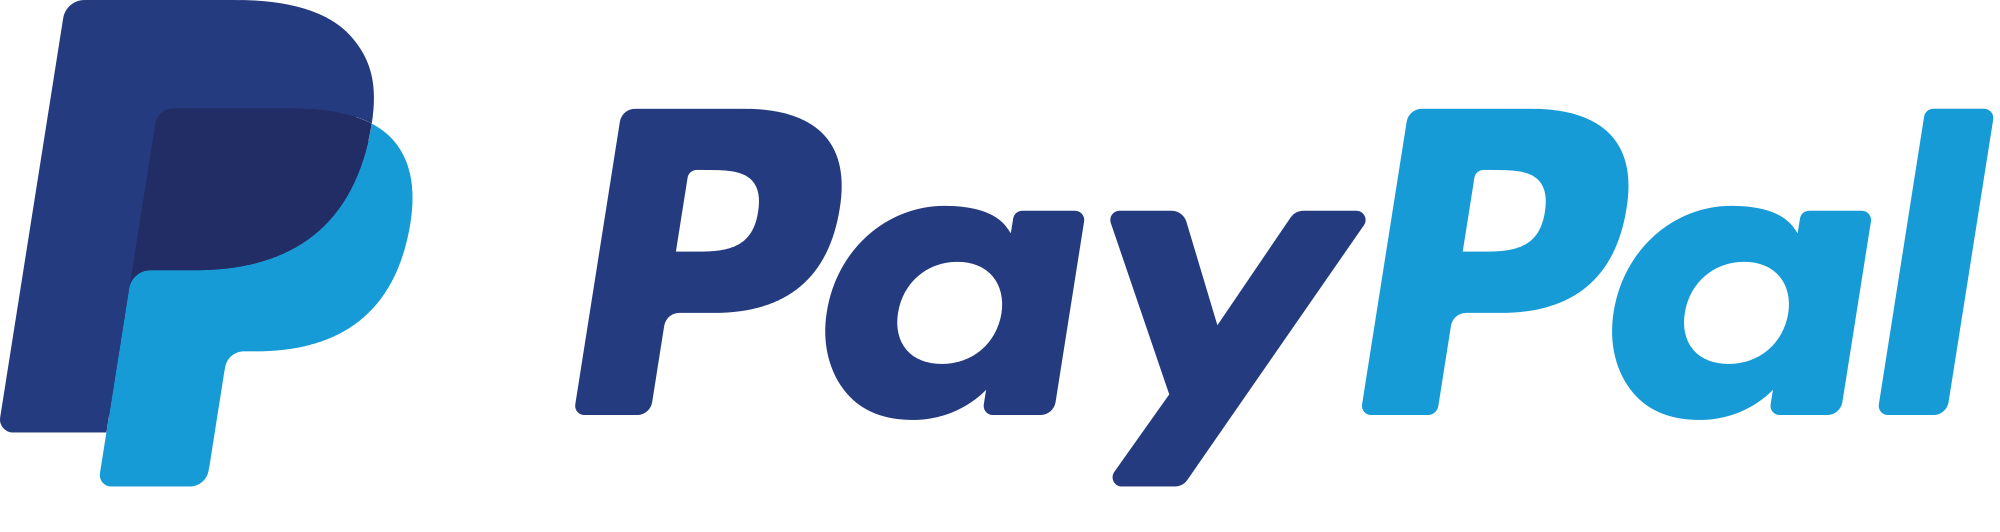 PayPal logo sgv